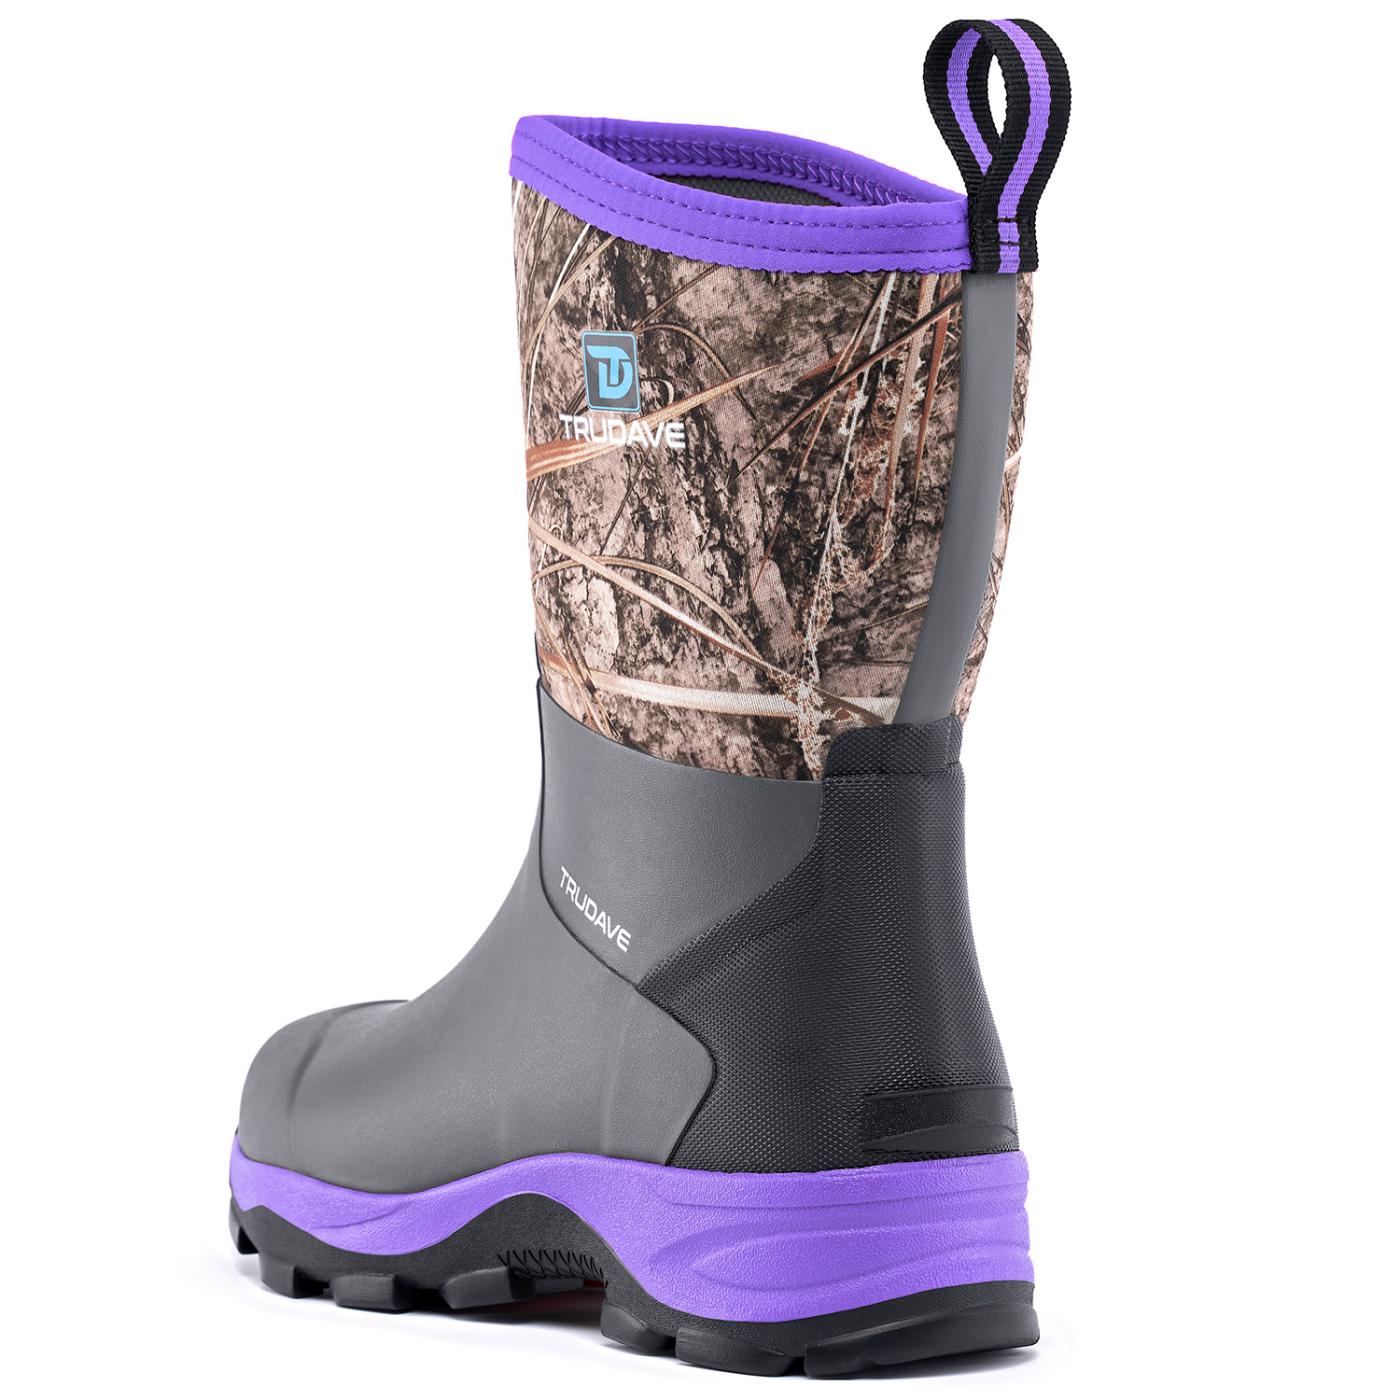 Trudave Waterproof Mud Boots for Women-Purple